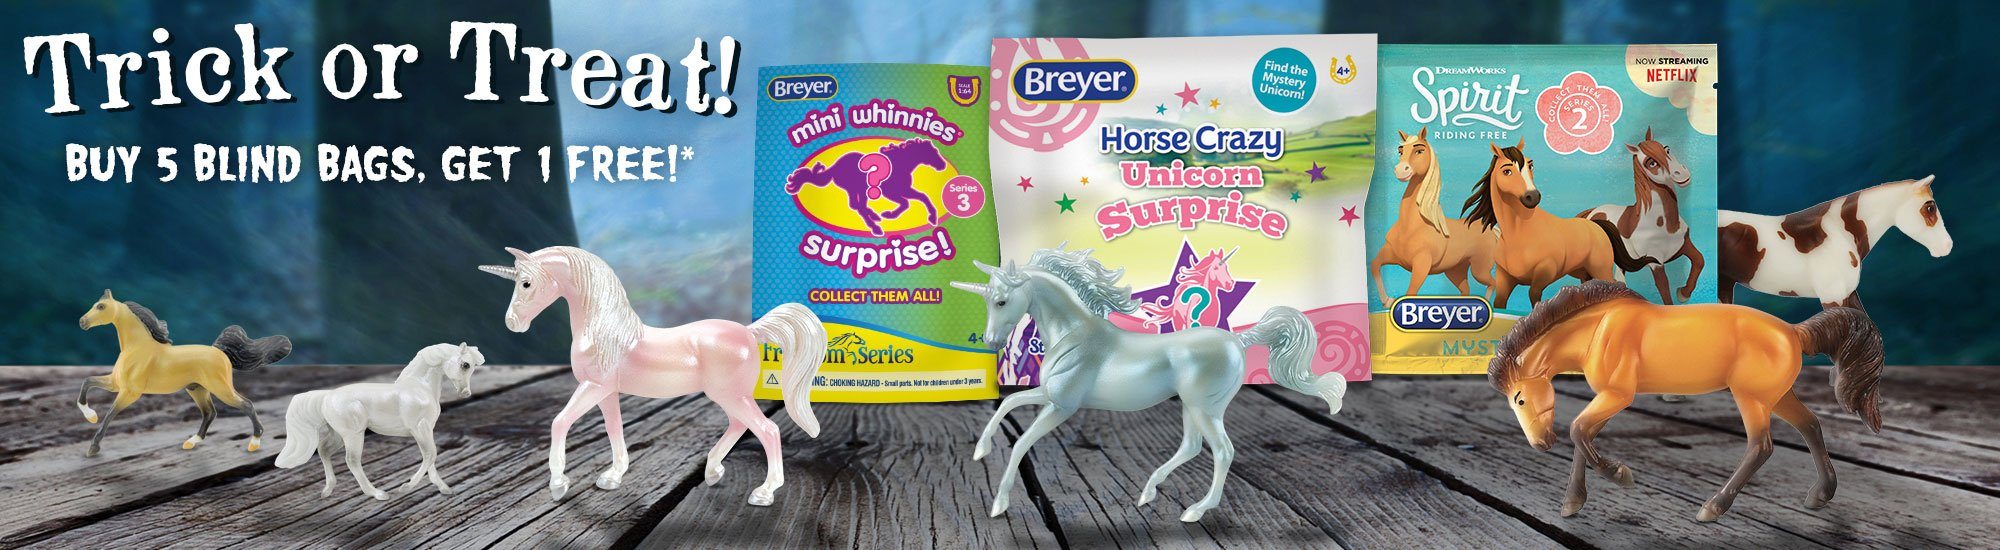 breyer horse crazy unicorn surprise